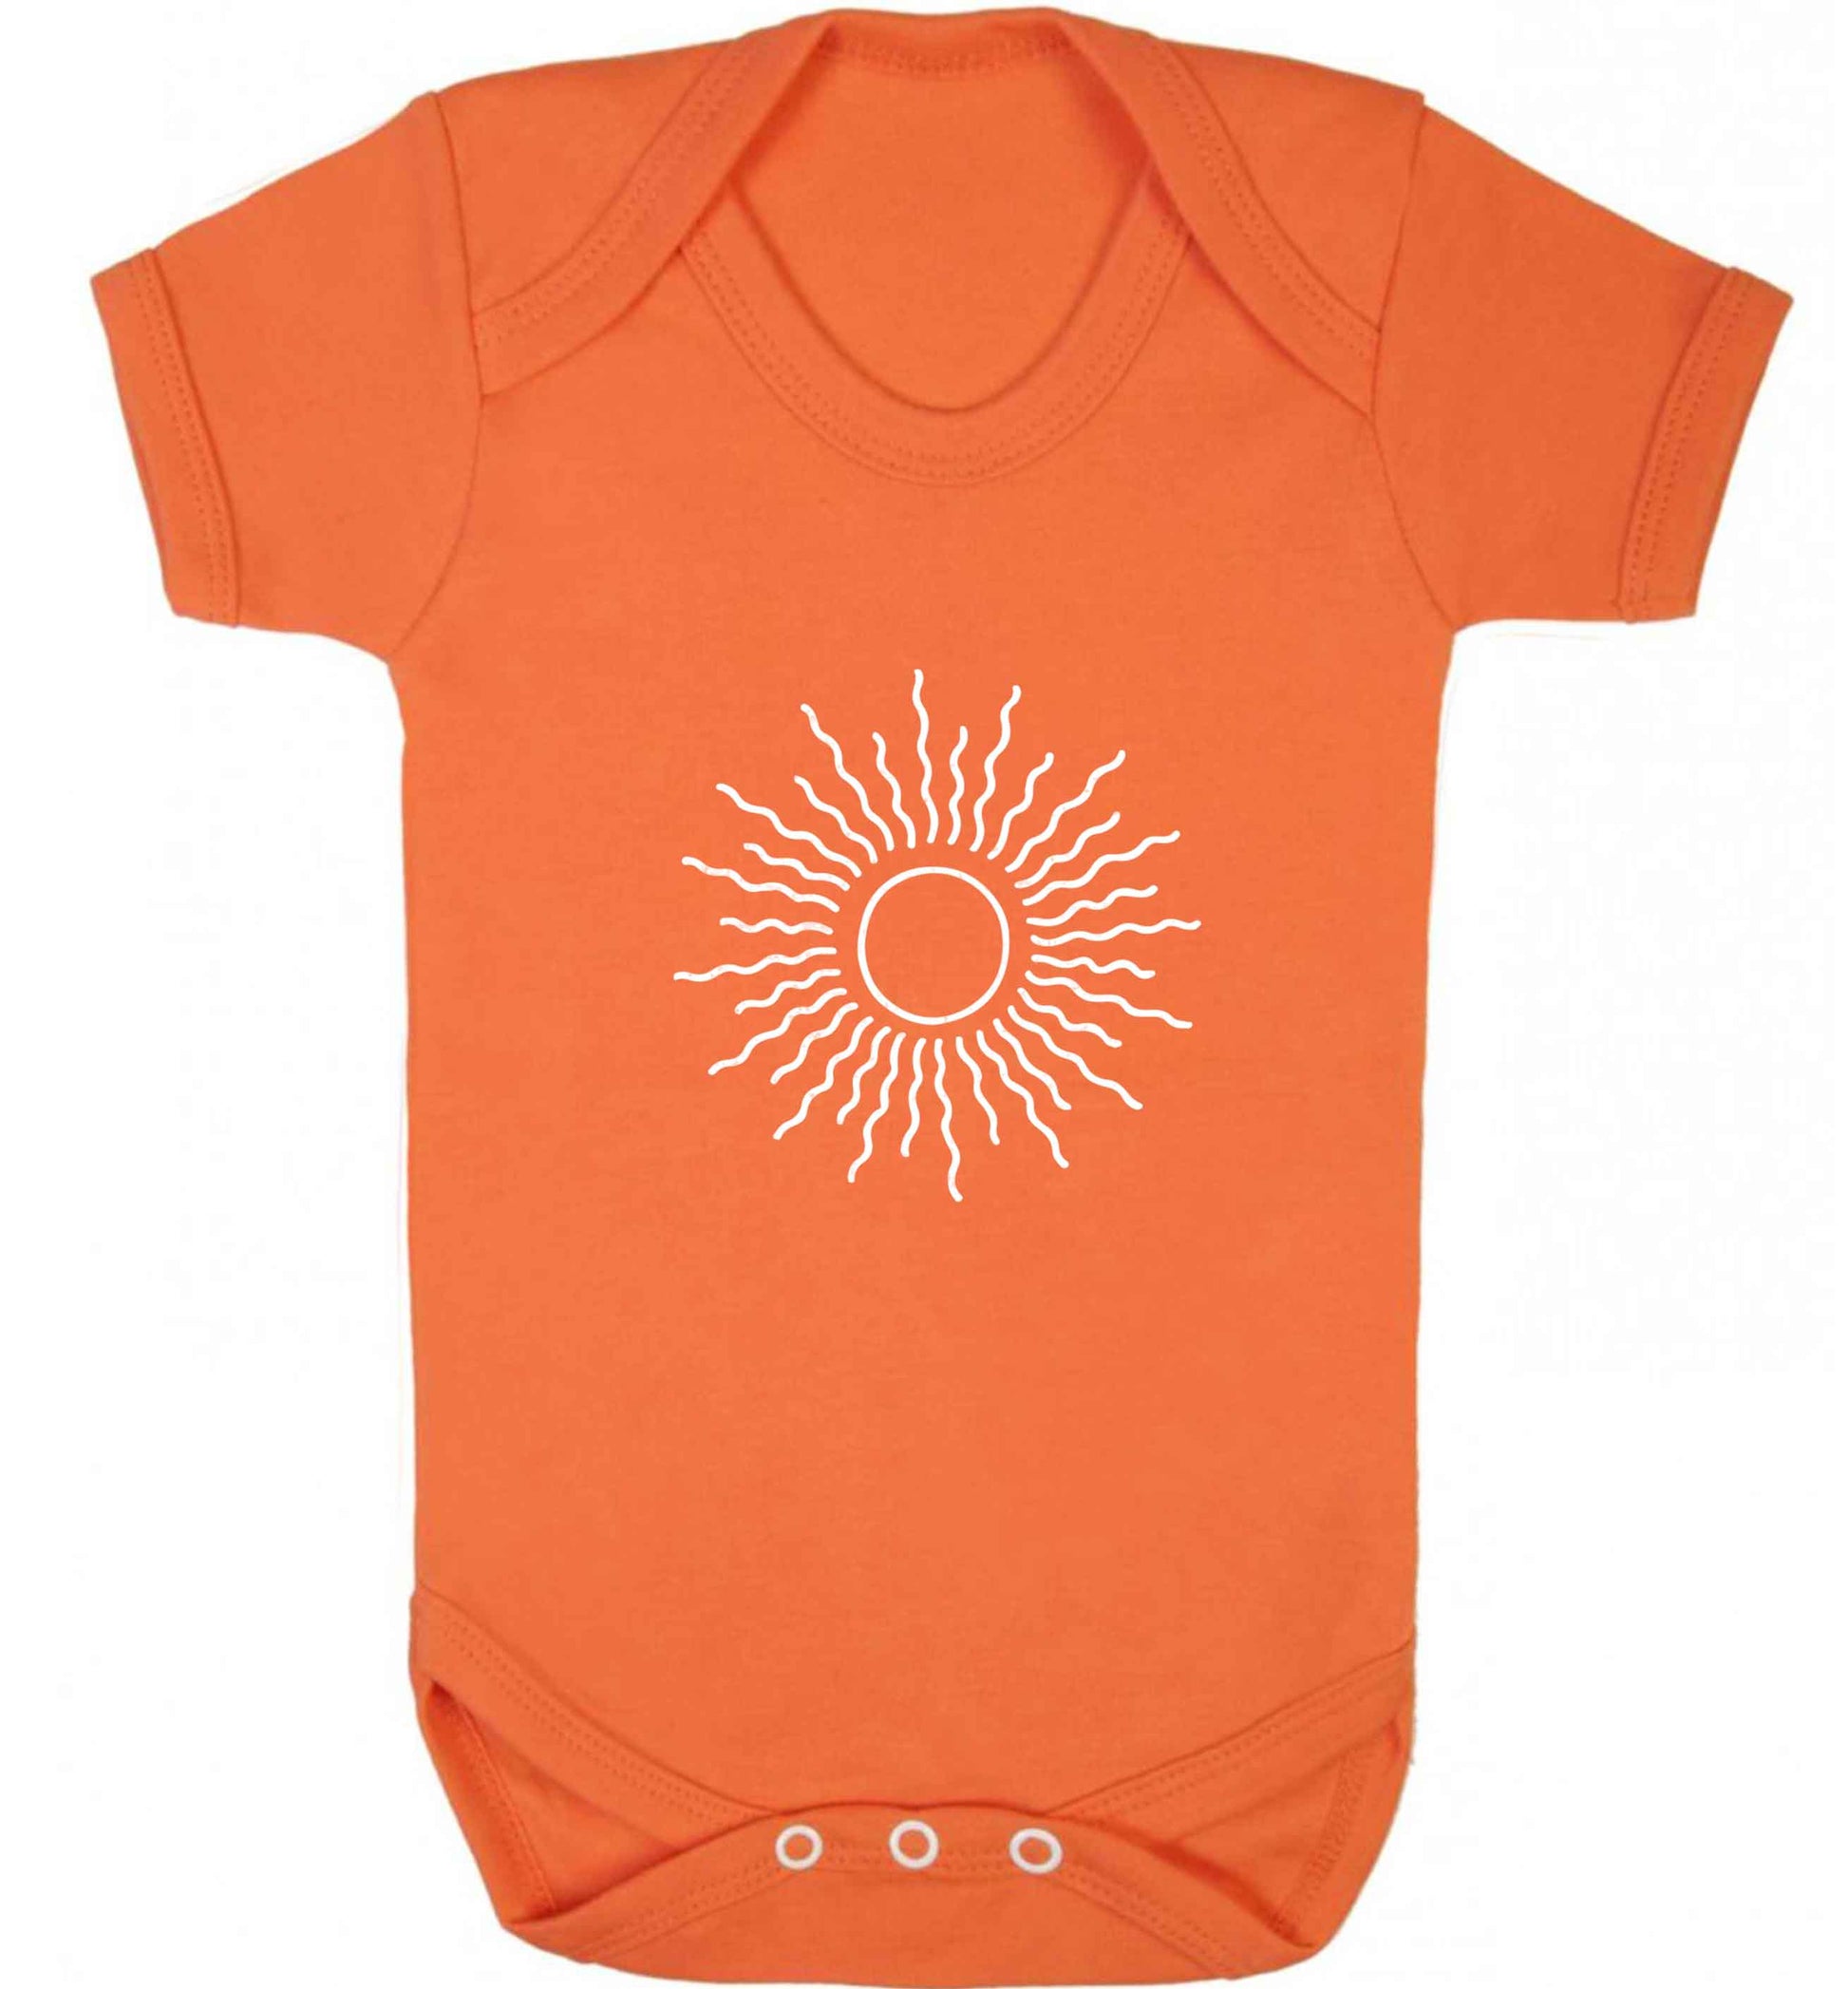 Sun illustration baby vest orange 18-24 months